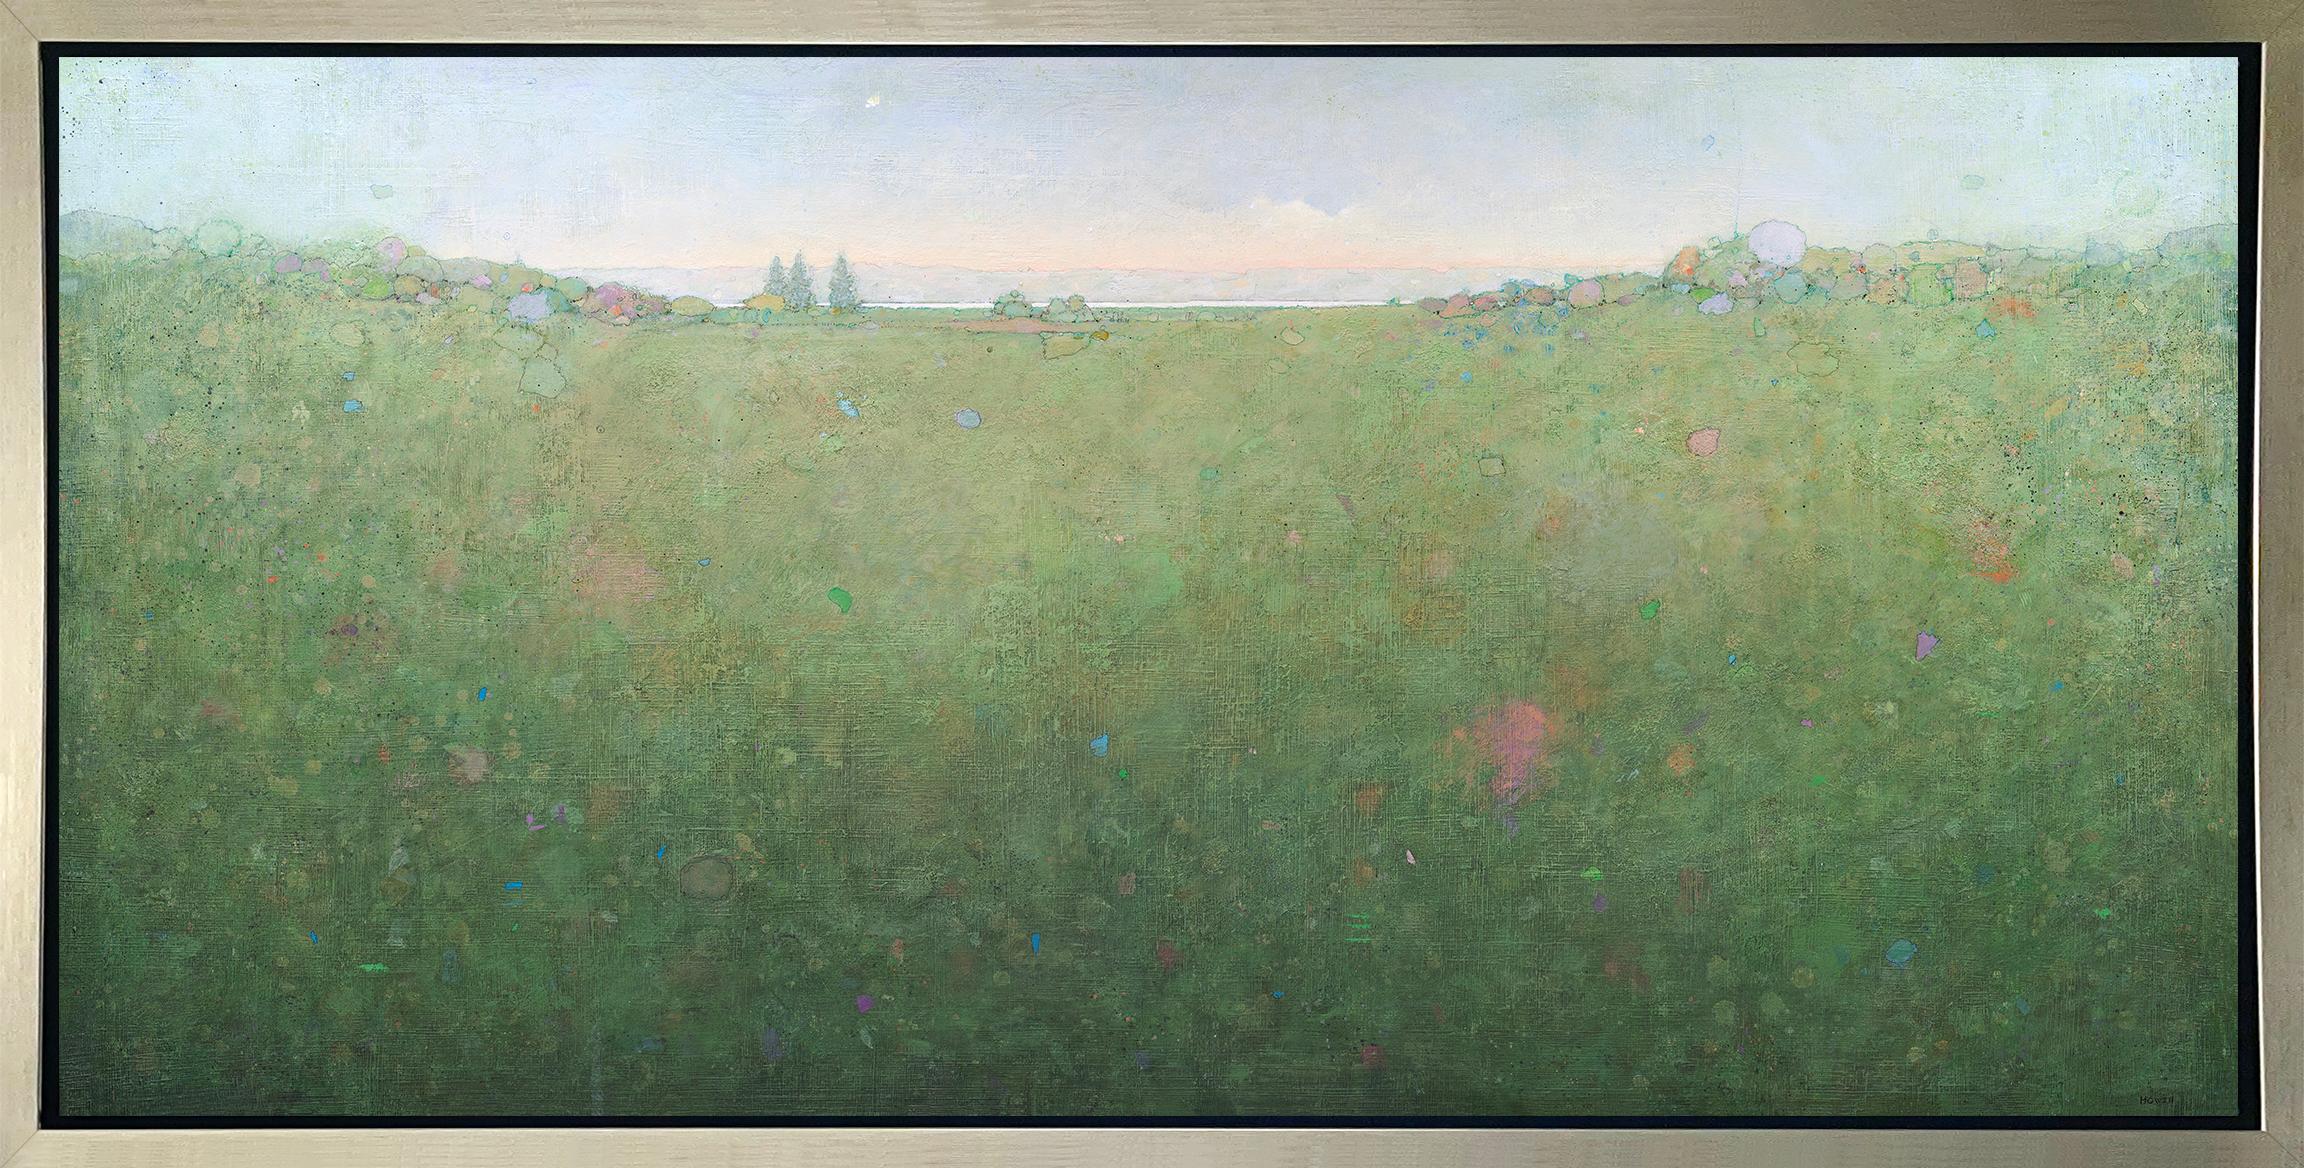 Landscape Print Elwood Howell - ""Viridis", Édition limitée Impression giclée, 12"" x 24""